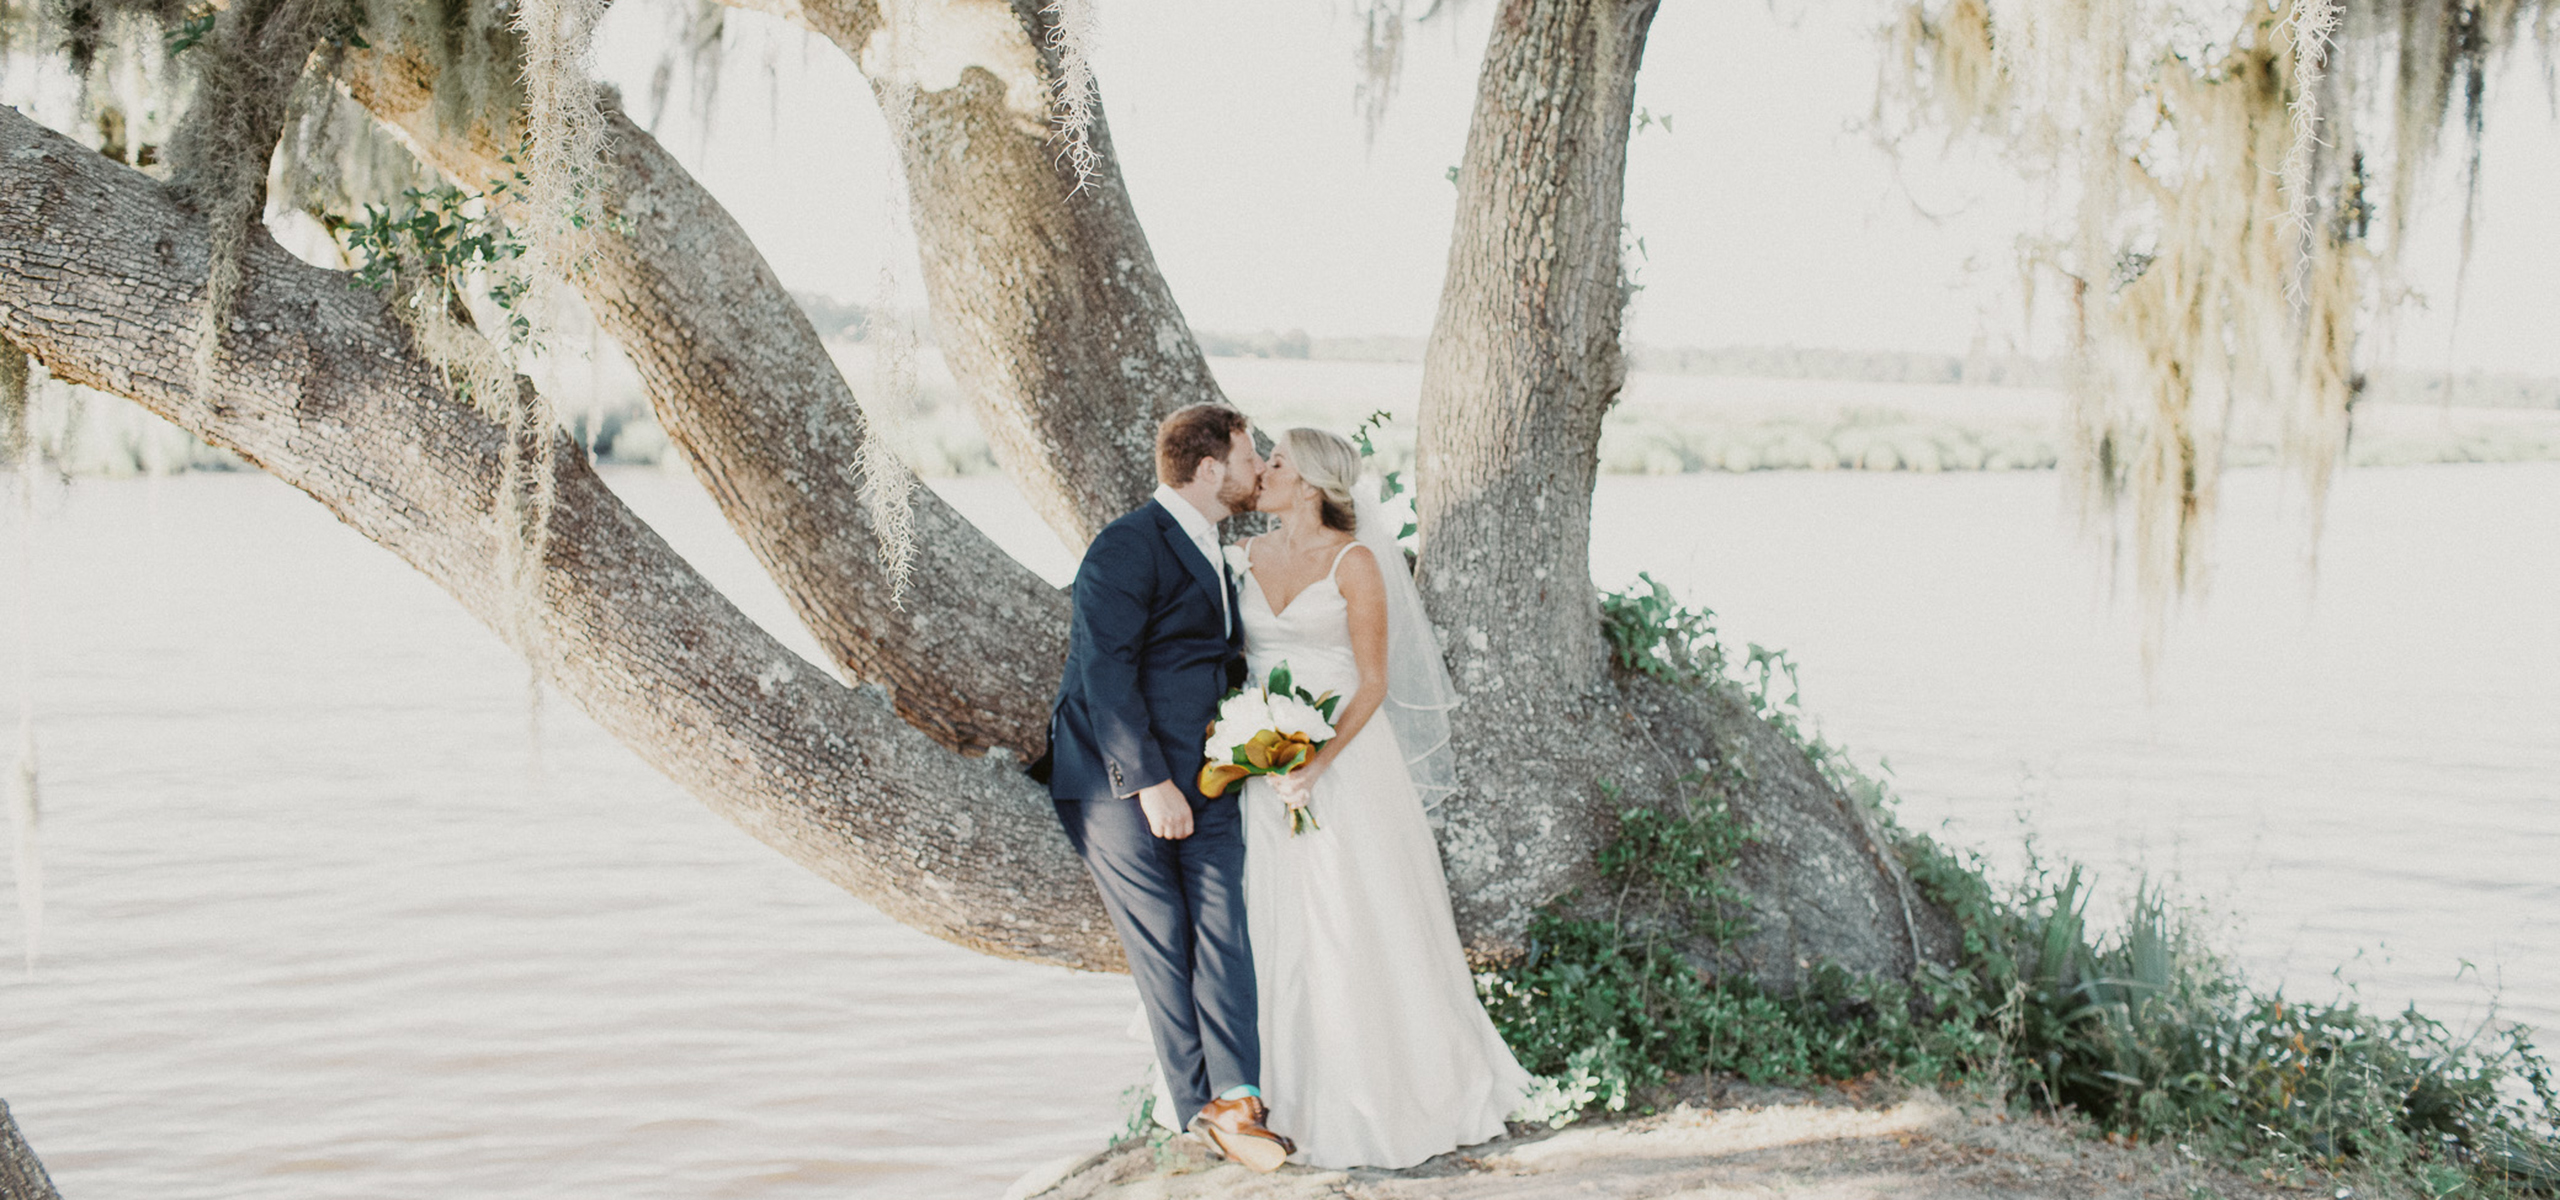 Winter Haven Florida Wedding Photography + Elopement Photography